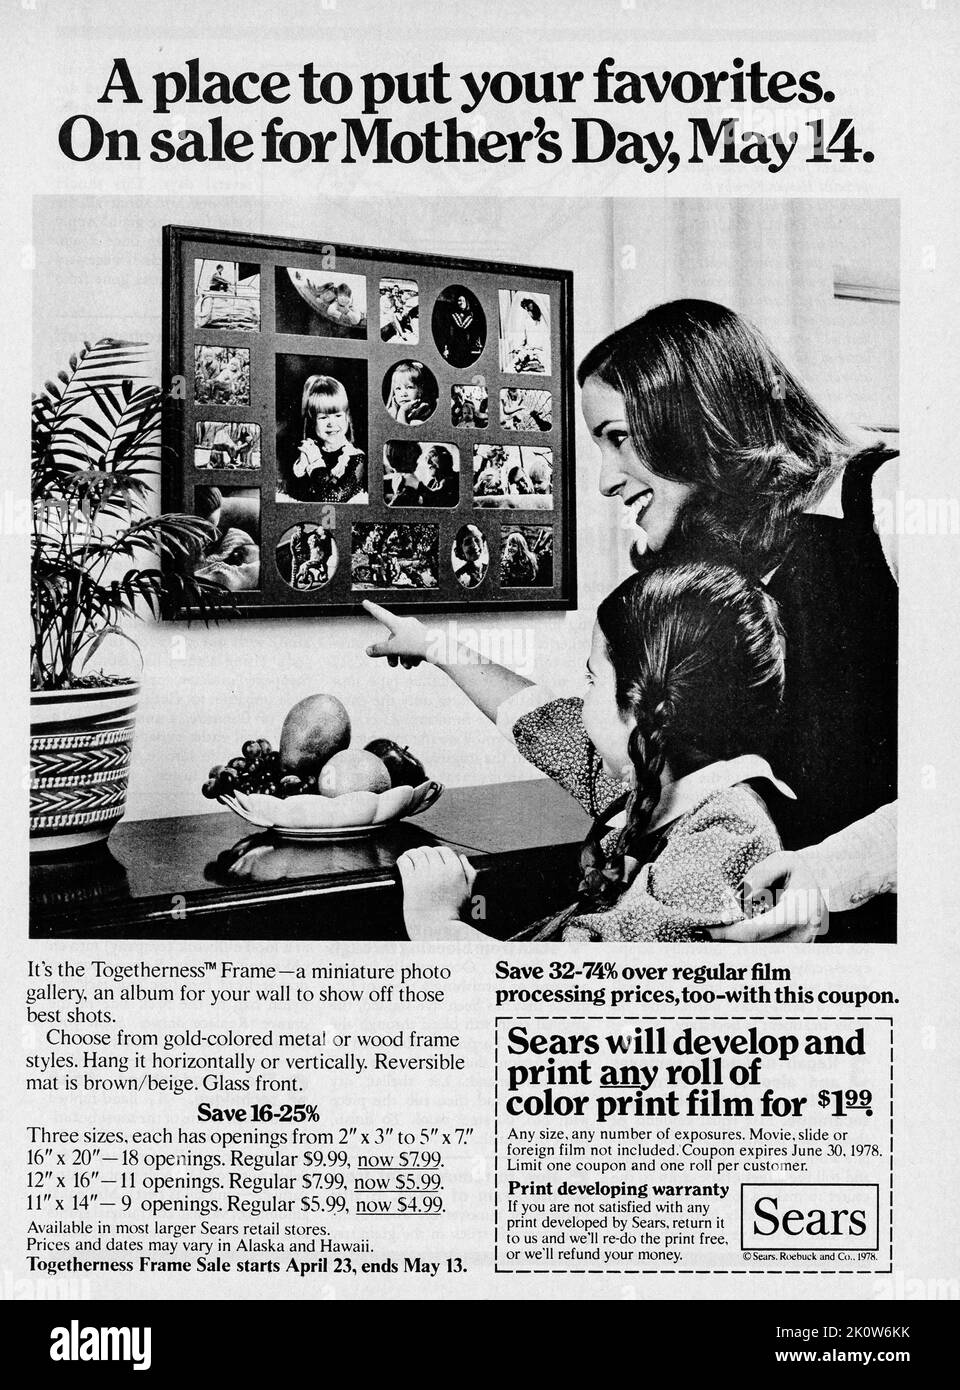 Vintage 19 May 1978 'Family Circle' magazine advert, USA Stock Photo